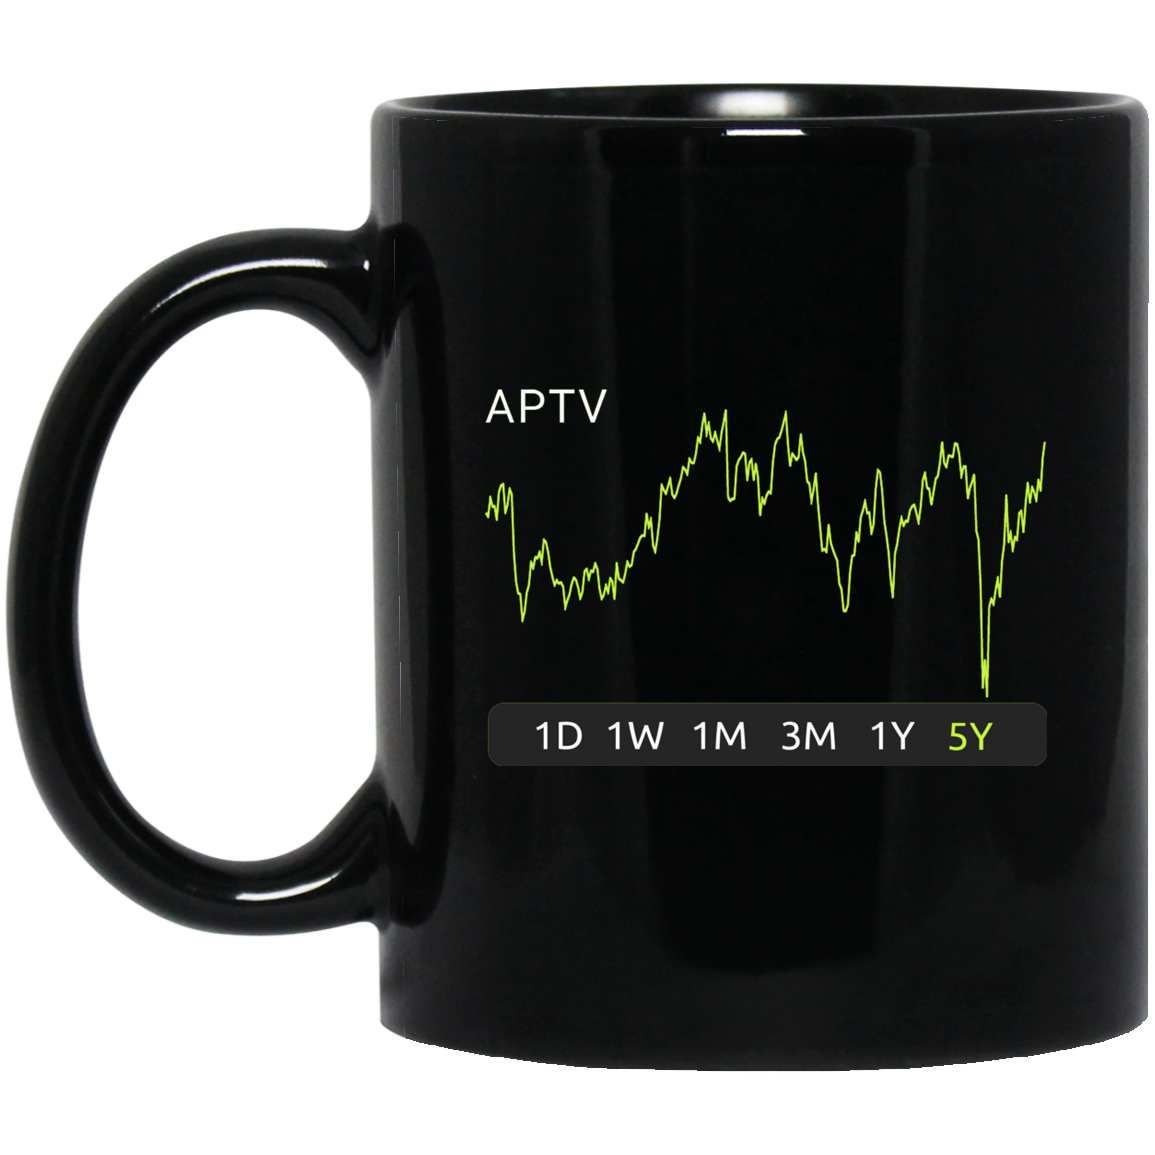 APTV Stock 5y Mug